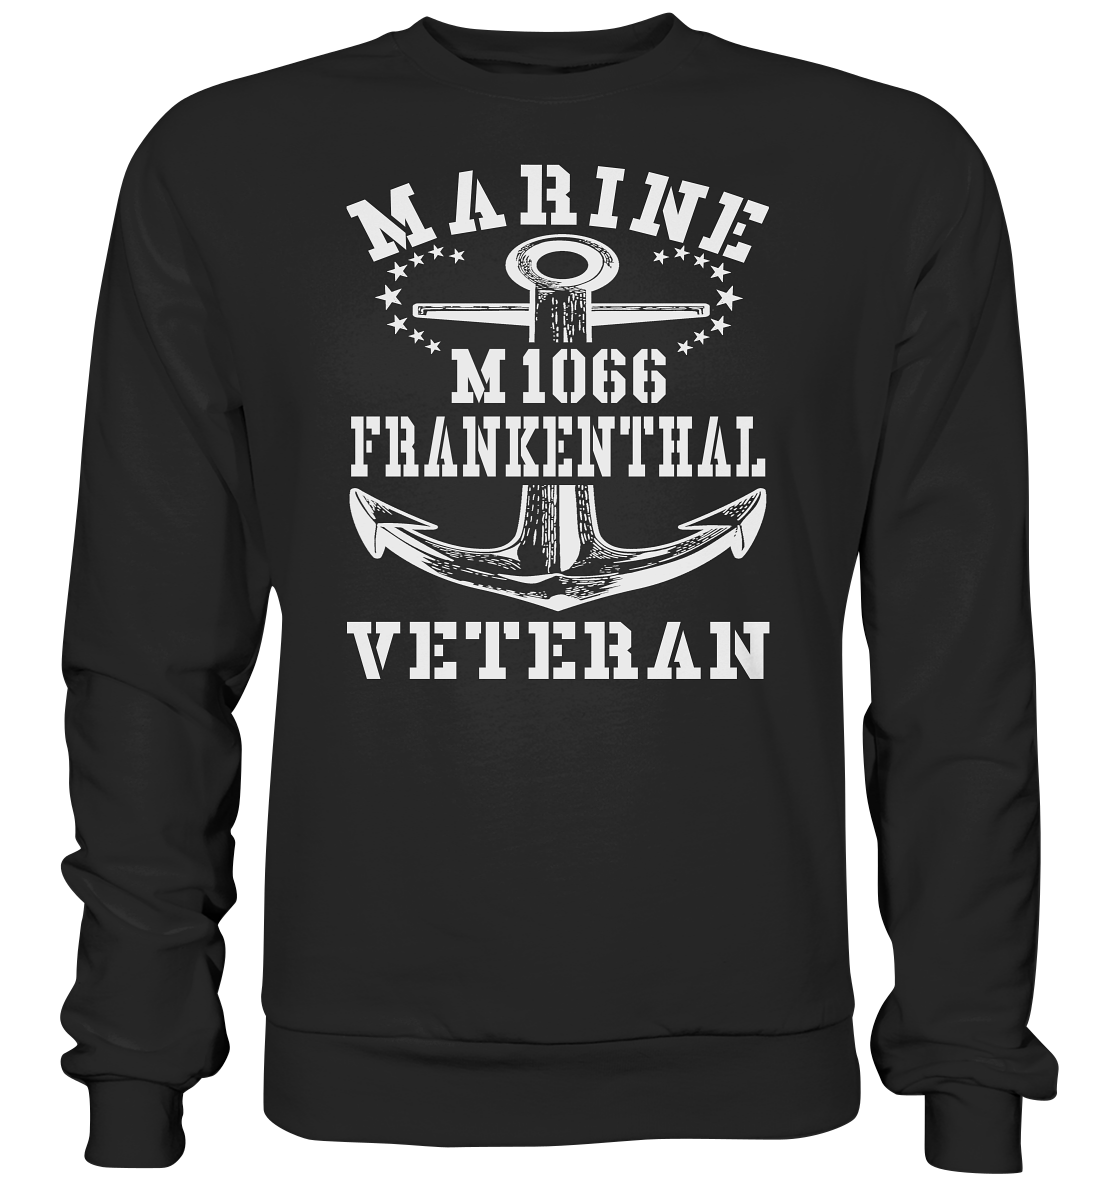 Mij.-Boot M1066 FRANKENTHAL Marine Veteran - Premium Sweatshirt